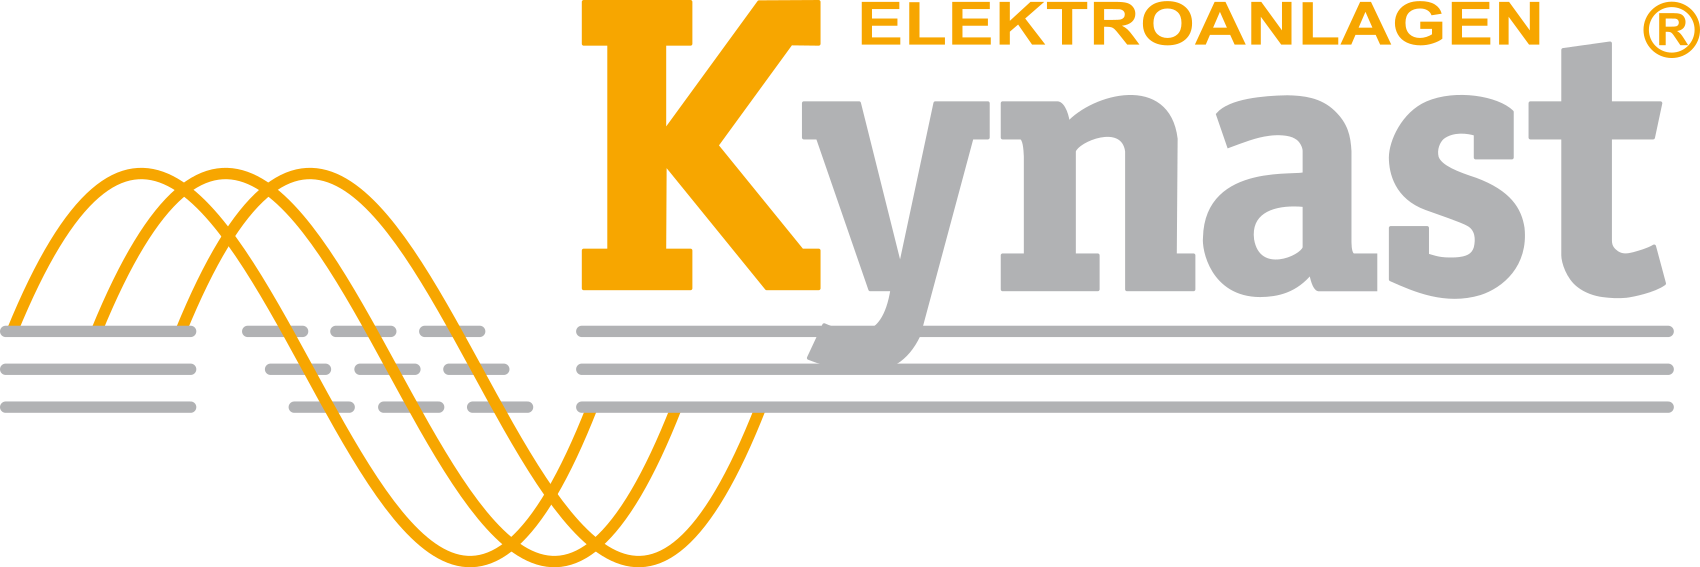 Kynast Logo 